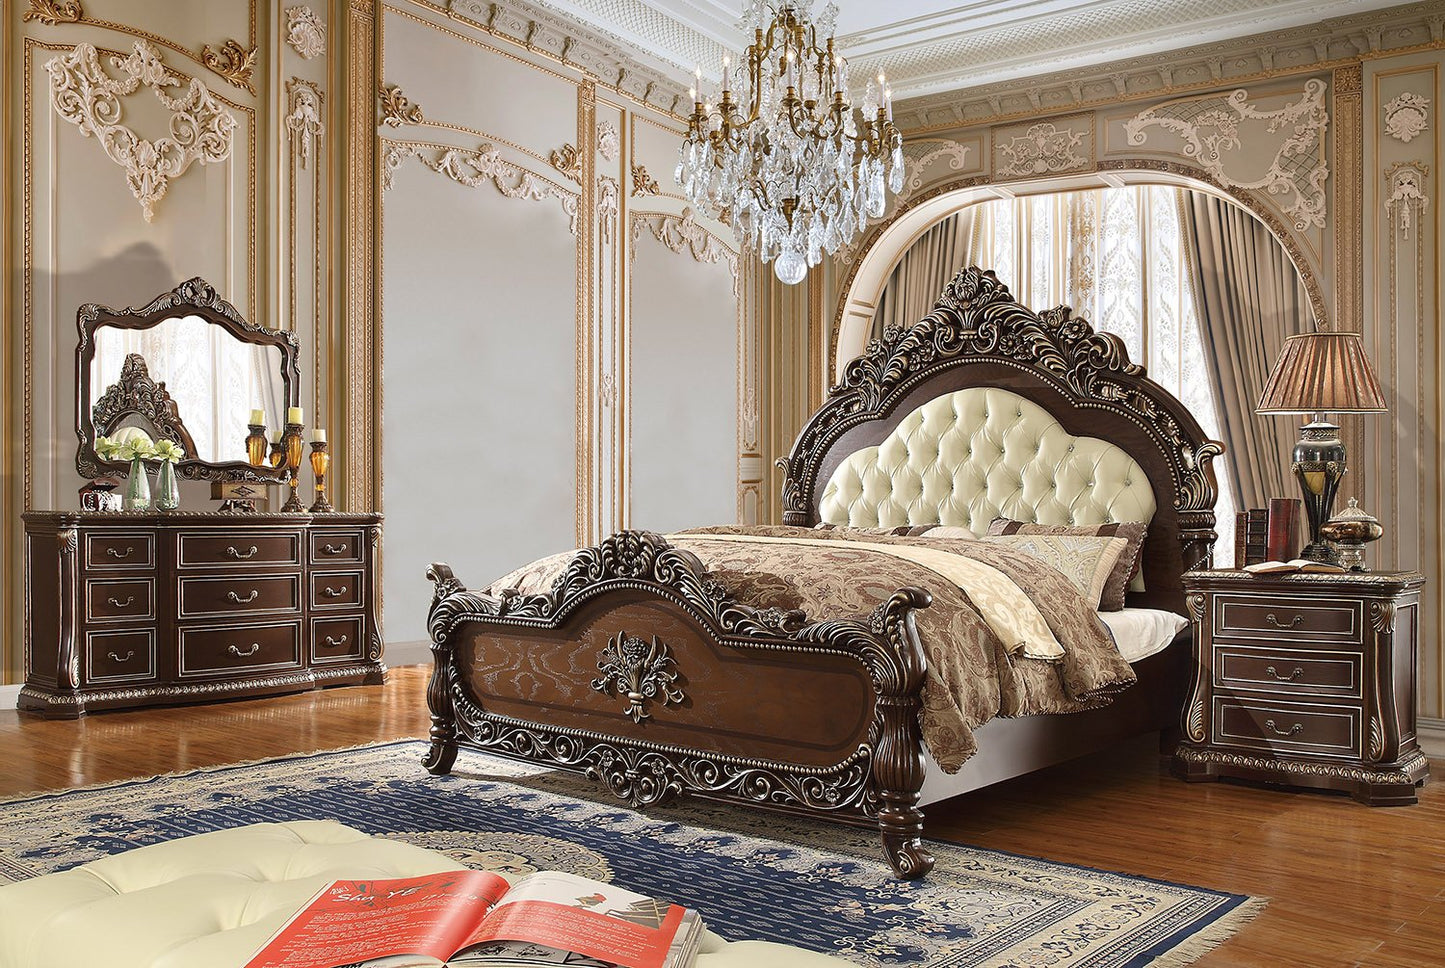 Leather E King 5PC Bedroom Set in Brown Cherry Finish EK8013-5PC European